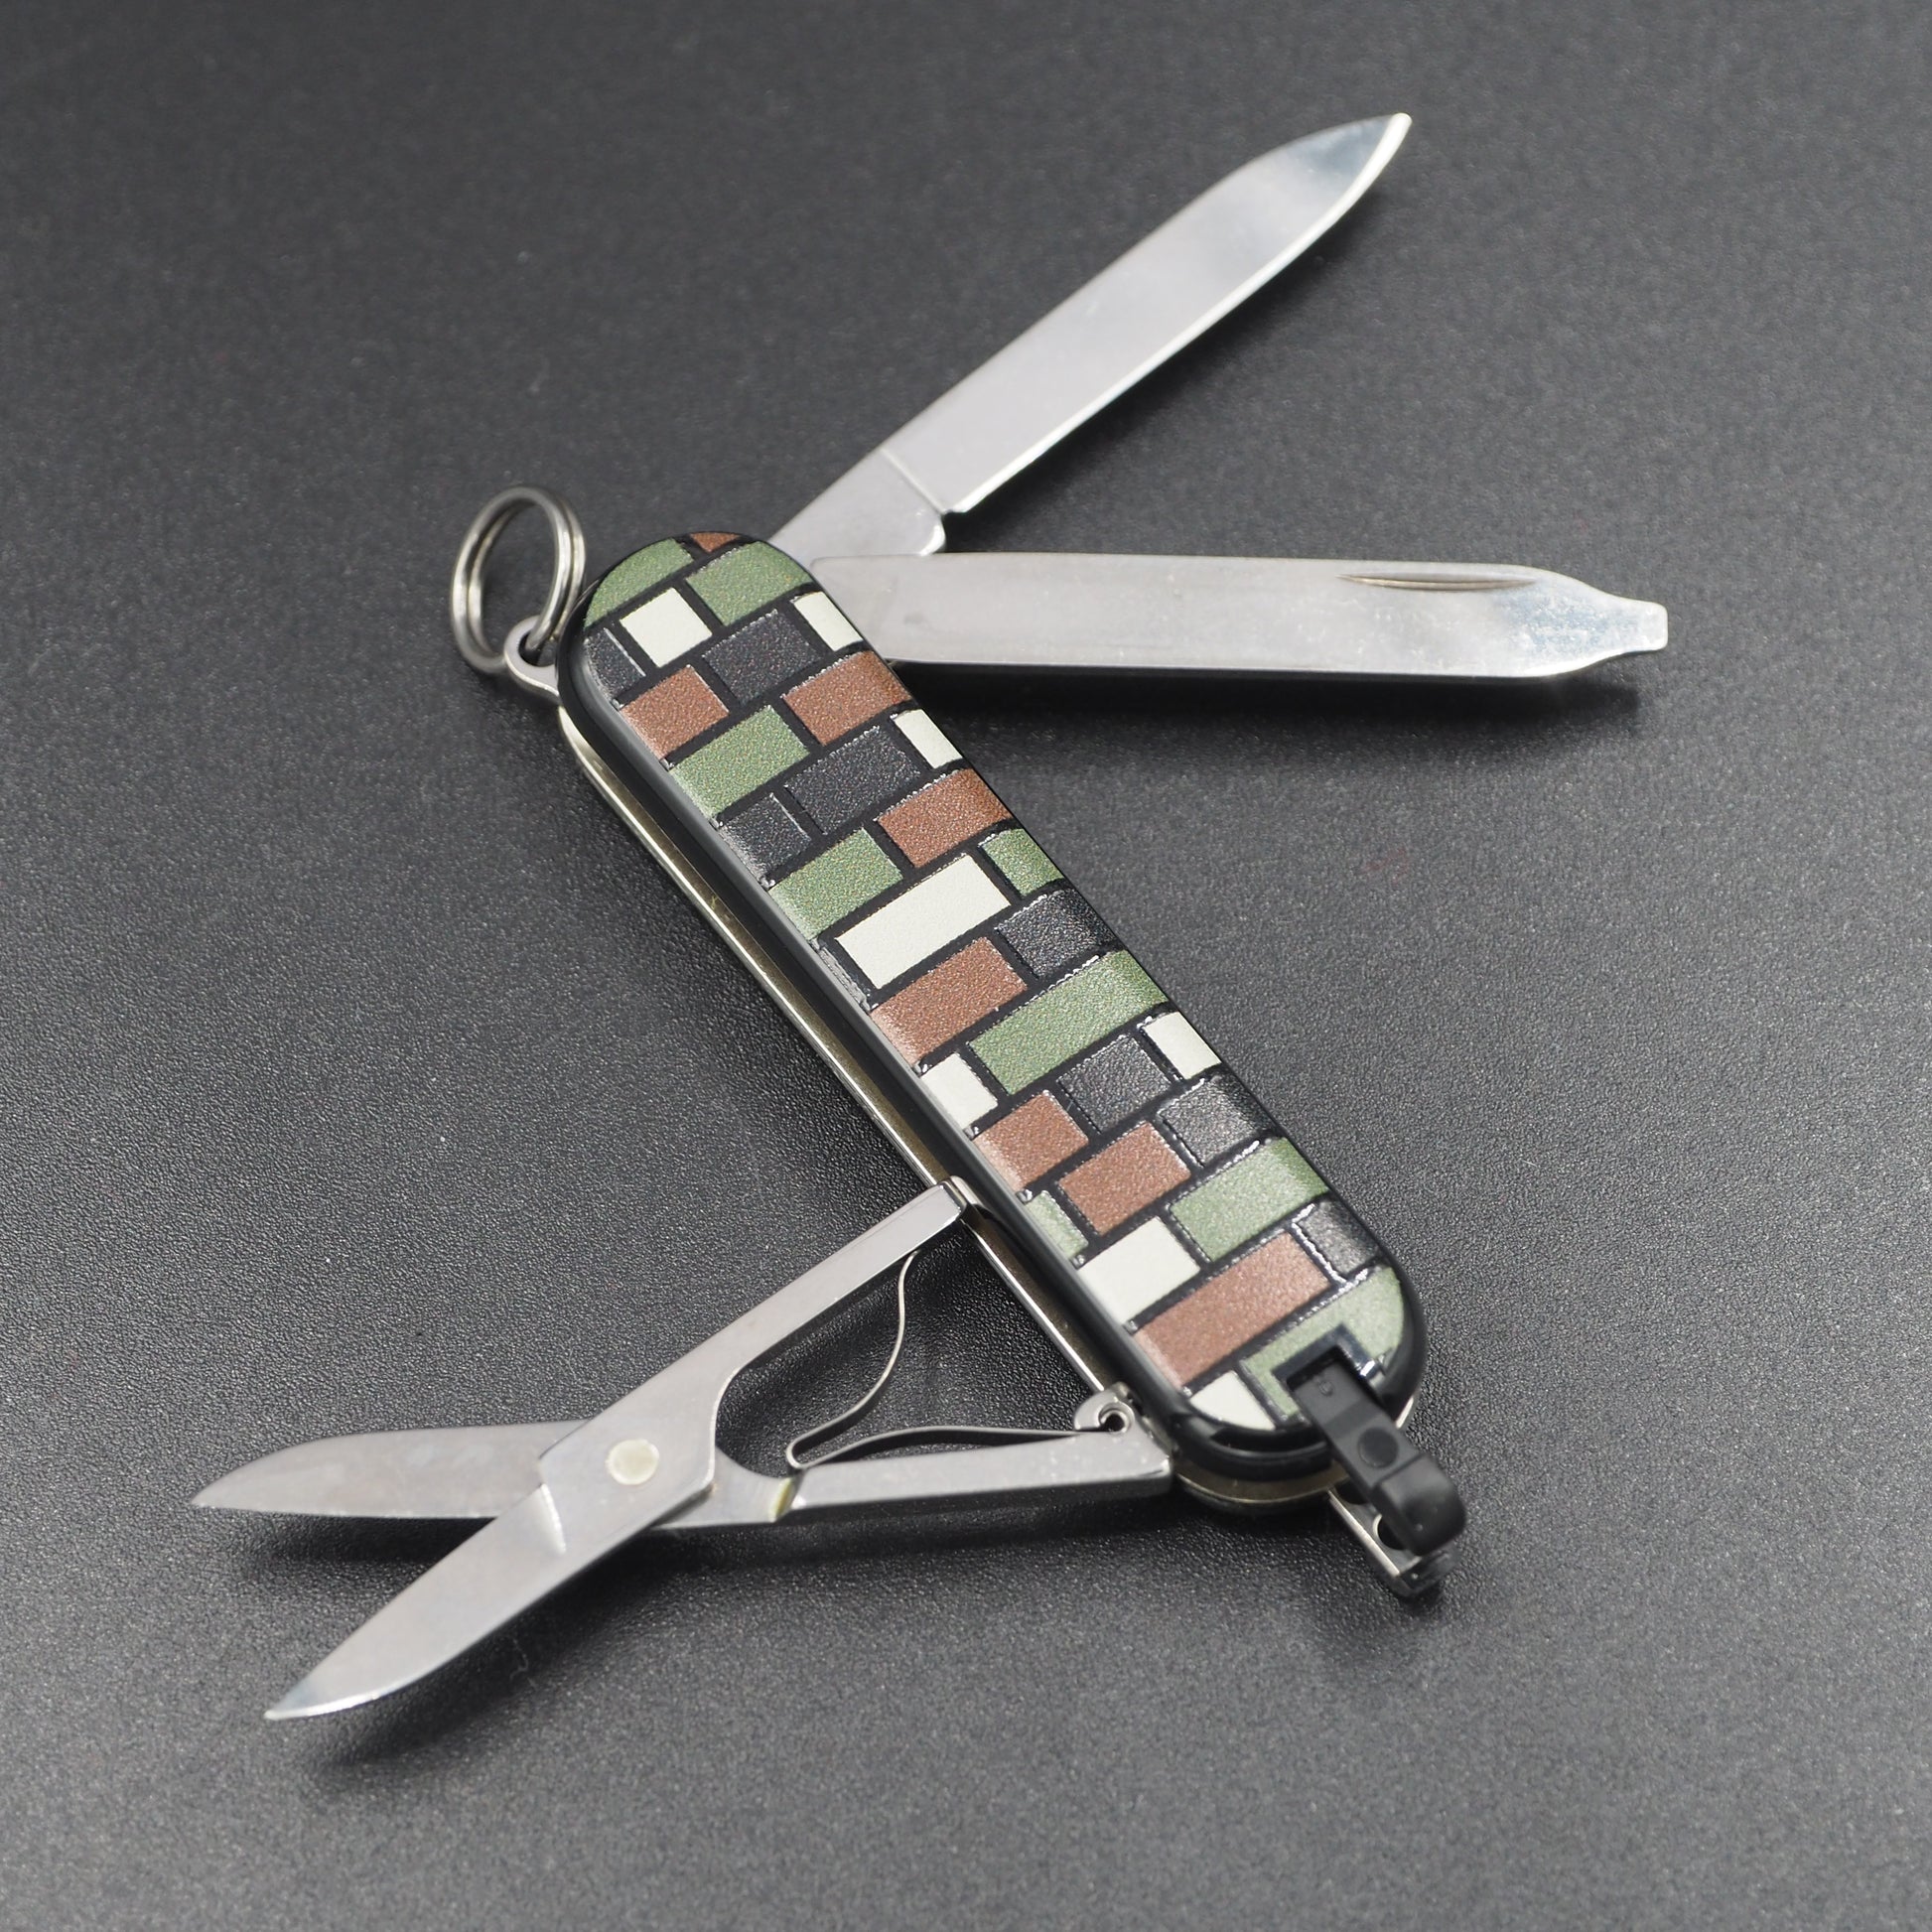 3d Printed Swiss Army Knife